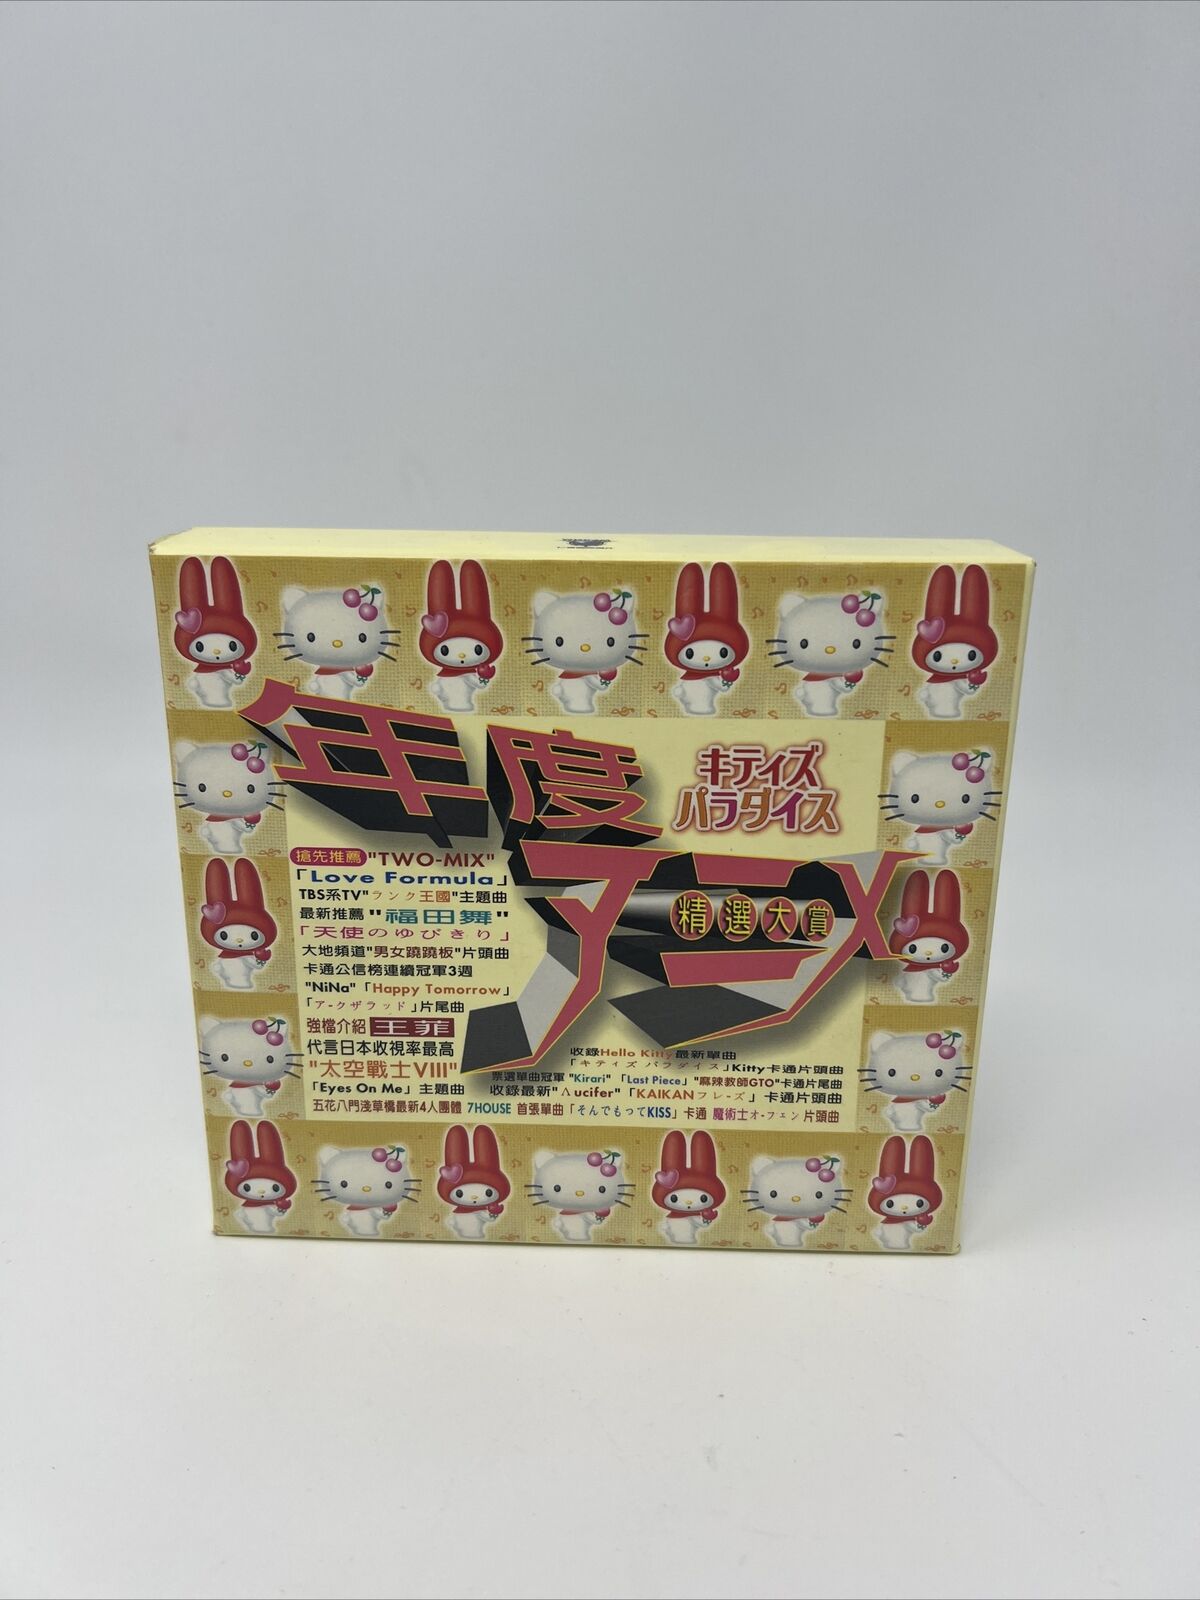 Vintage Rare 1999 Japanese Hello Kitty's Paradise Audio CDs Wisdom Records Japan